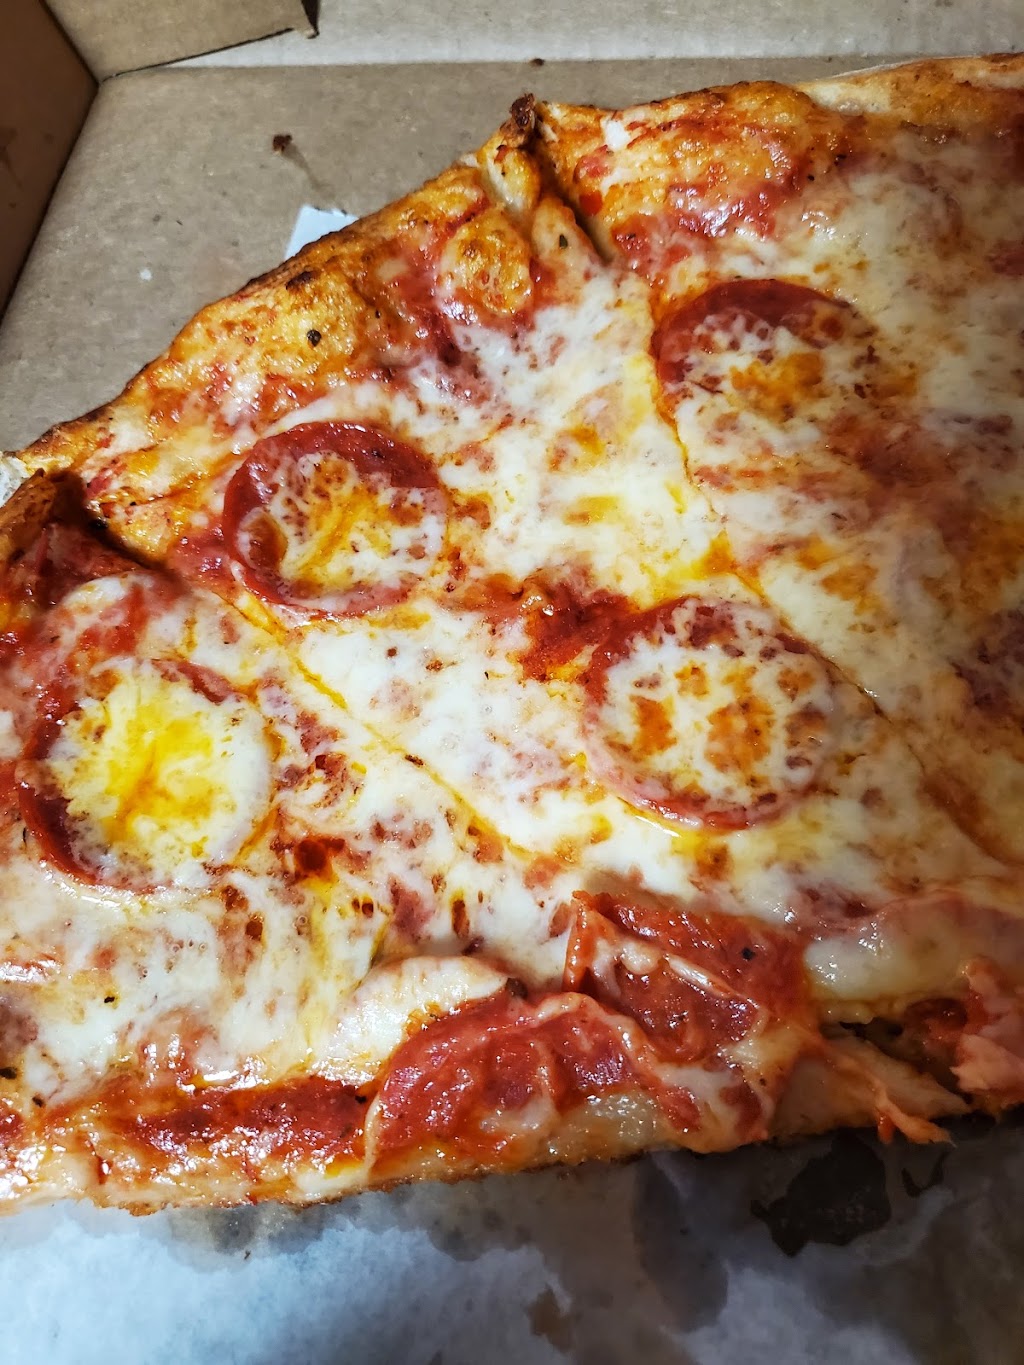 BWs Pizza | 4790 Tuscarawas Rd, Beaver, PA 15009, USA | Phone: (724) 495-2898